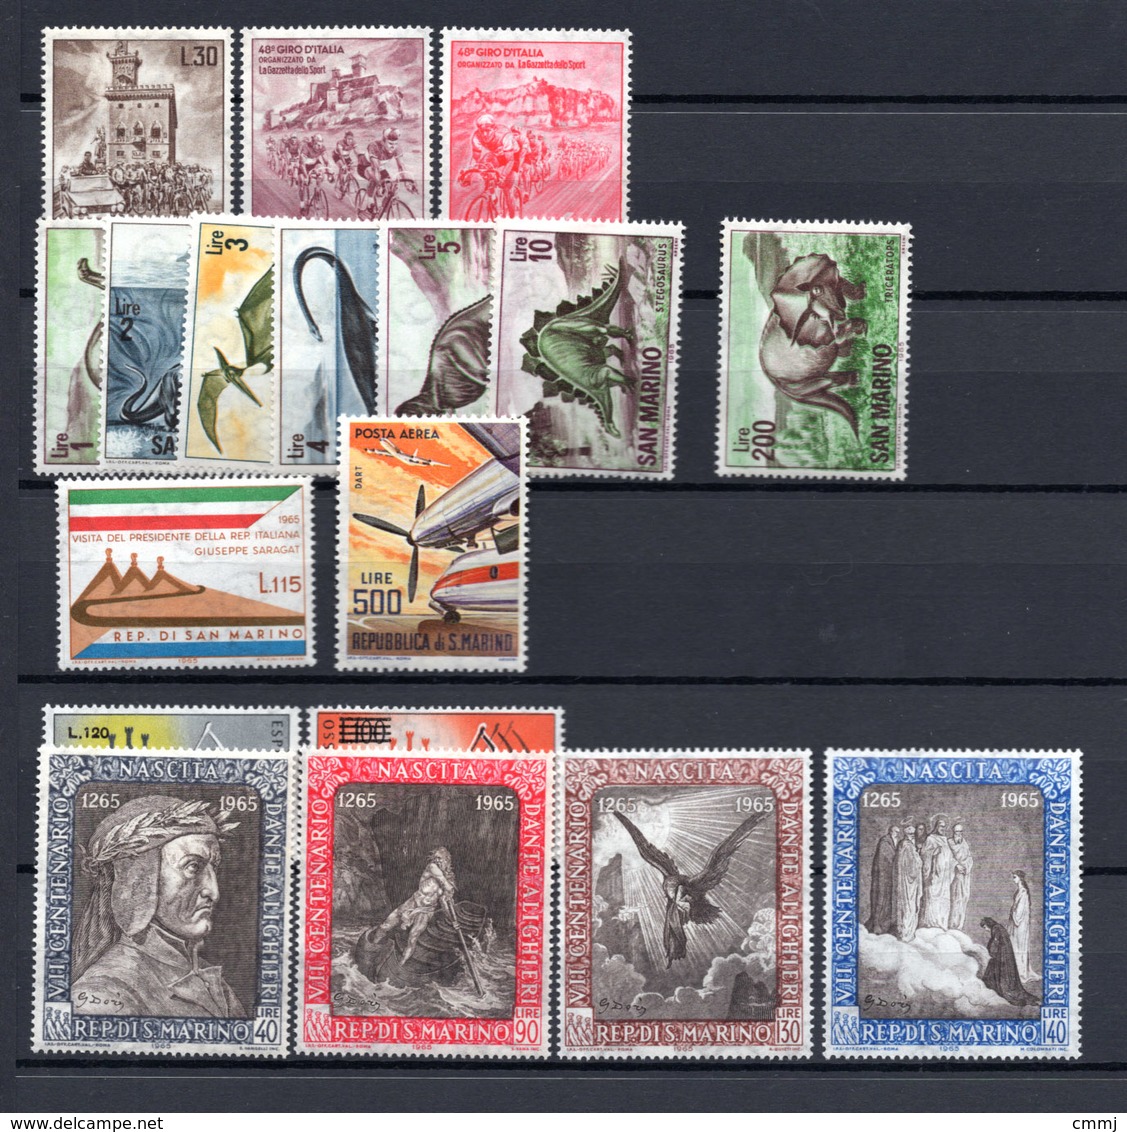 1965 - SAINT-MARIN - SAN MARINO - Unif. LOTTO - NH - (SM2017.31...) - Collections, Lots & Series